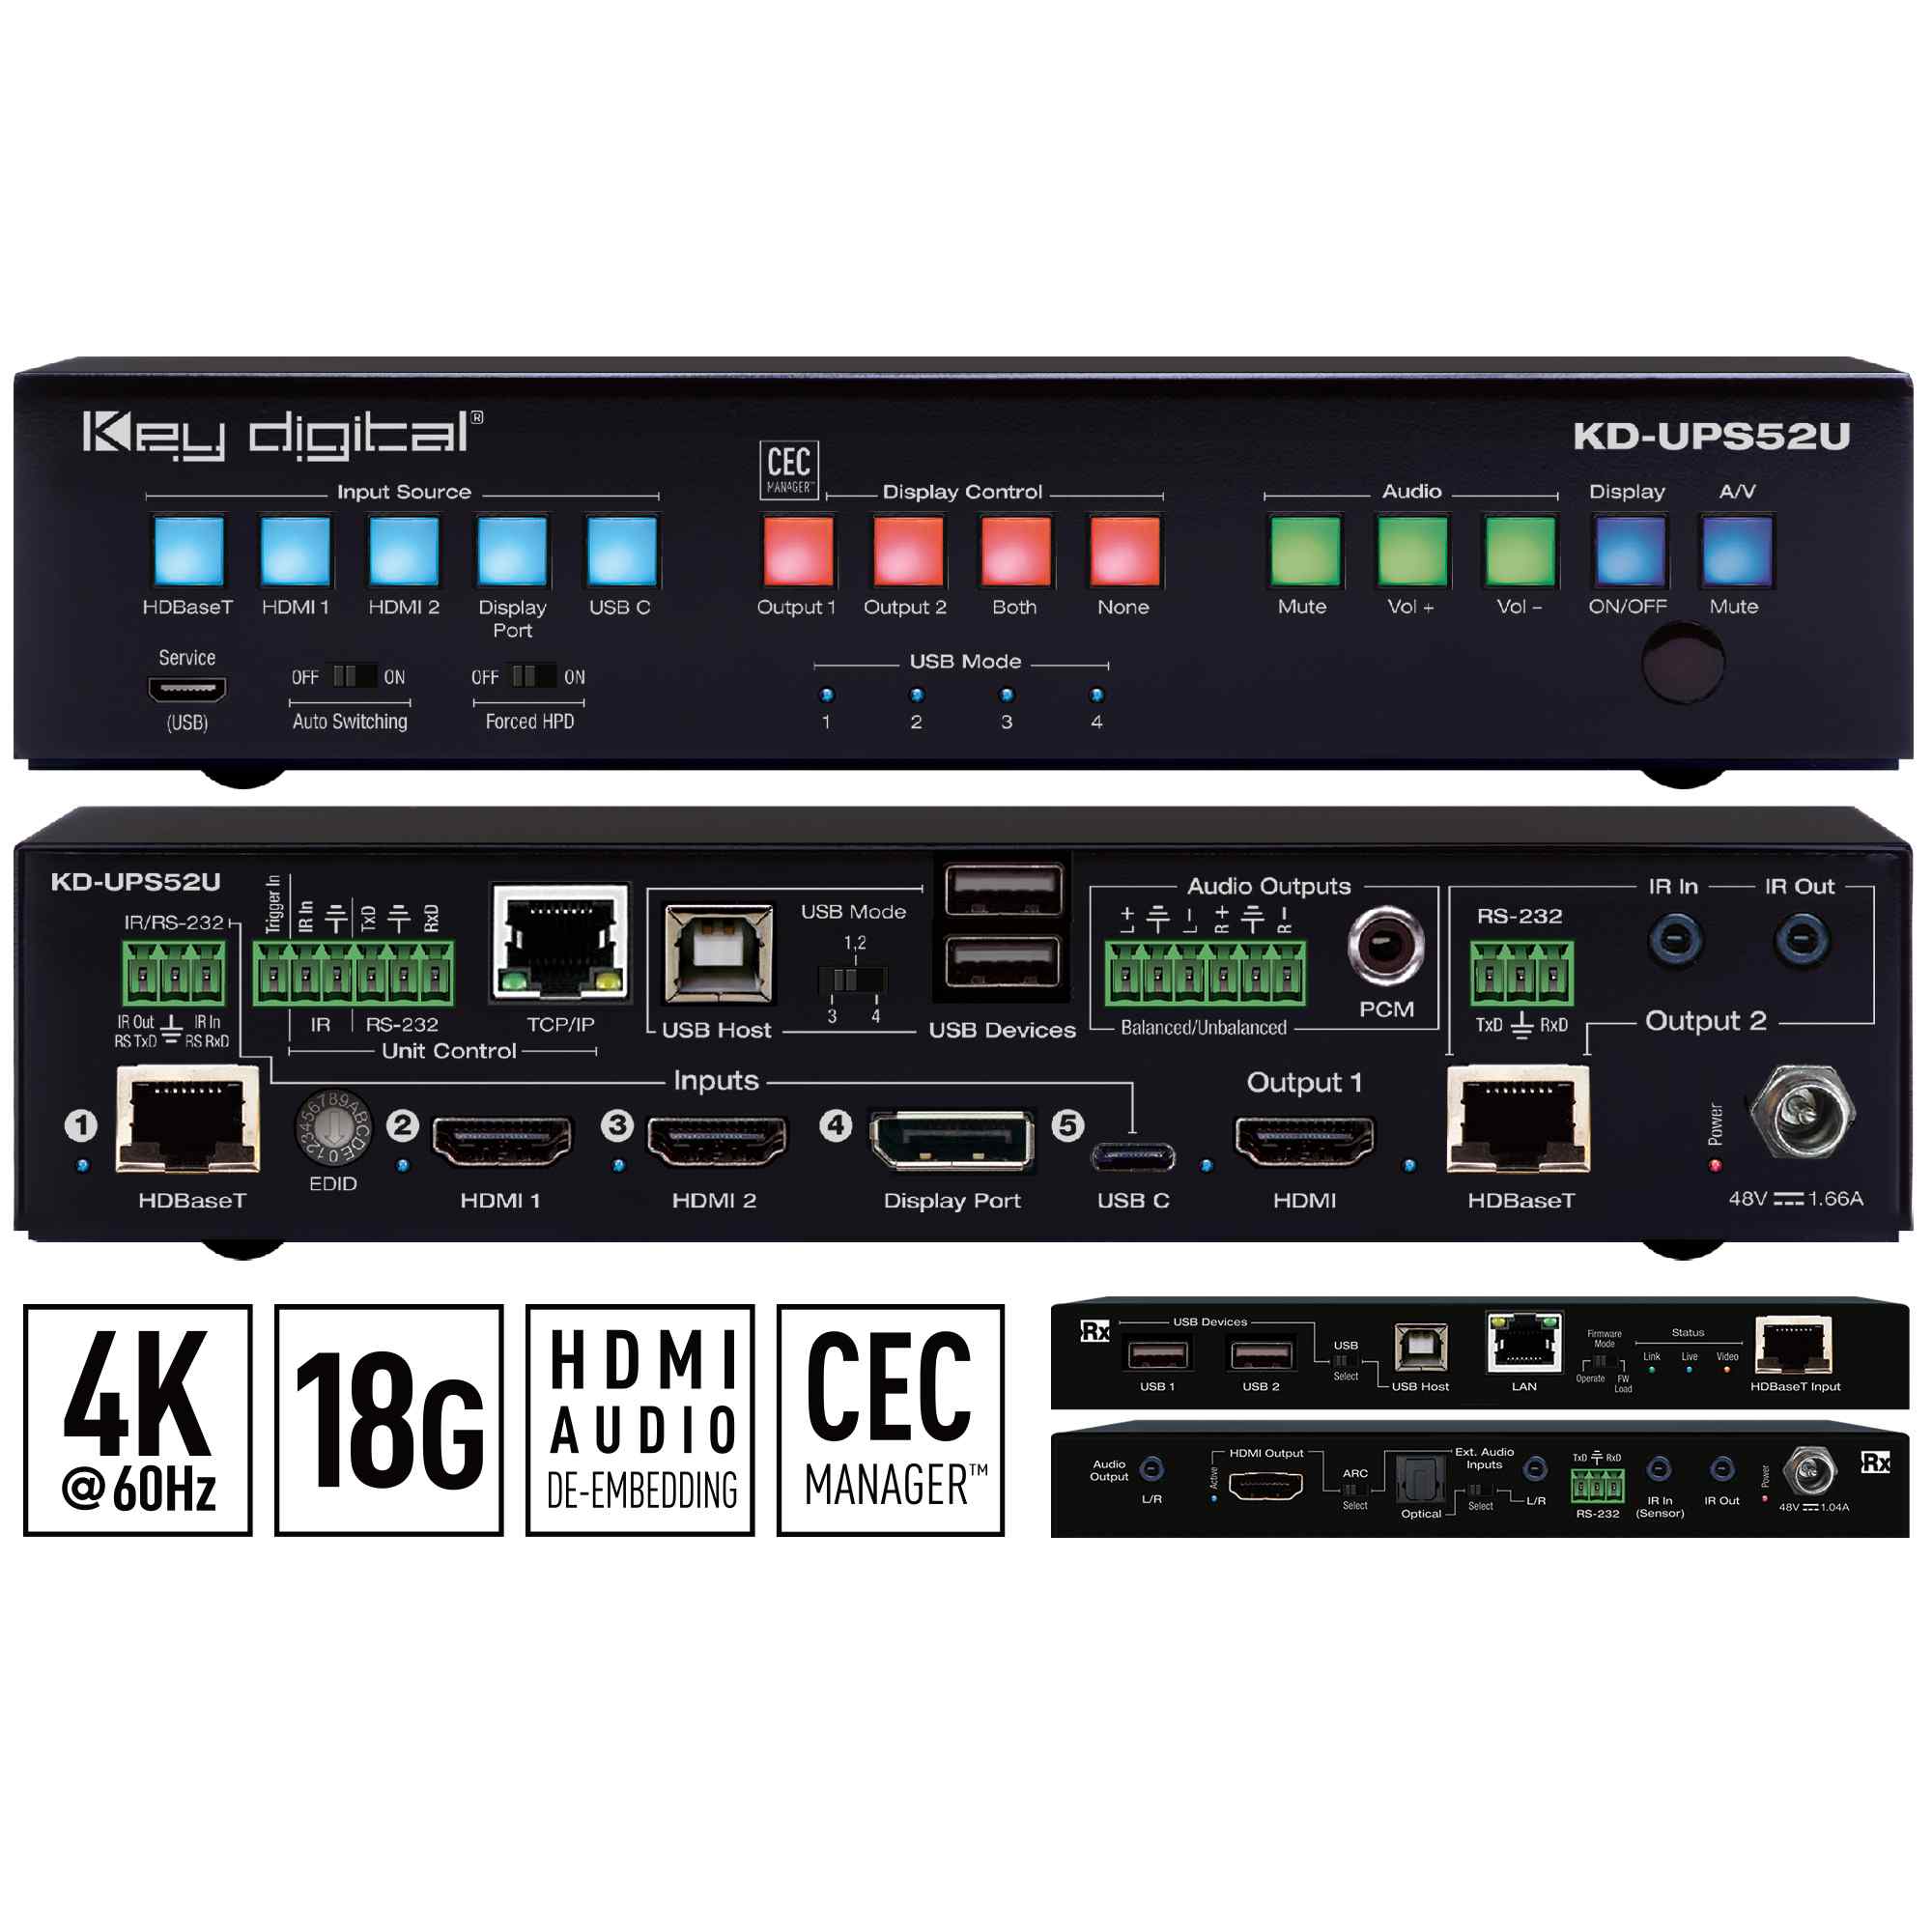 Key Digital  4K/18G USB/Universal Presentation Switcher with 5 Inputs (HDBaseT, 2x HDMI, DP, USB-C), 2 Mirrored Outputs (HDBaseT, HDMI), LAN, ARC, Audio De-Embed, IR, RS-232, IP Control, CEC Manager™. Includes Rx.  - KD-UPS52U